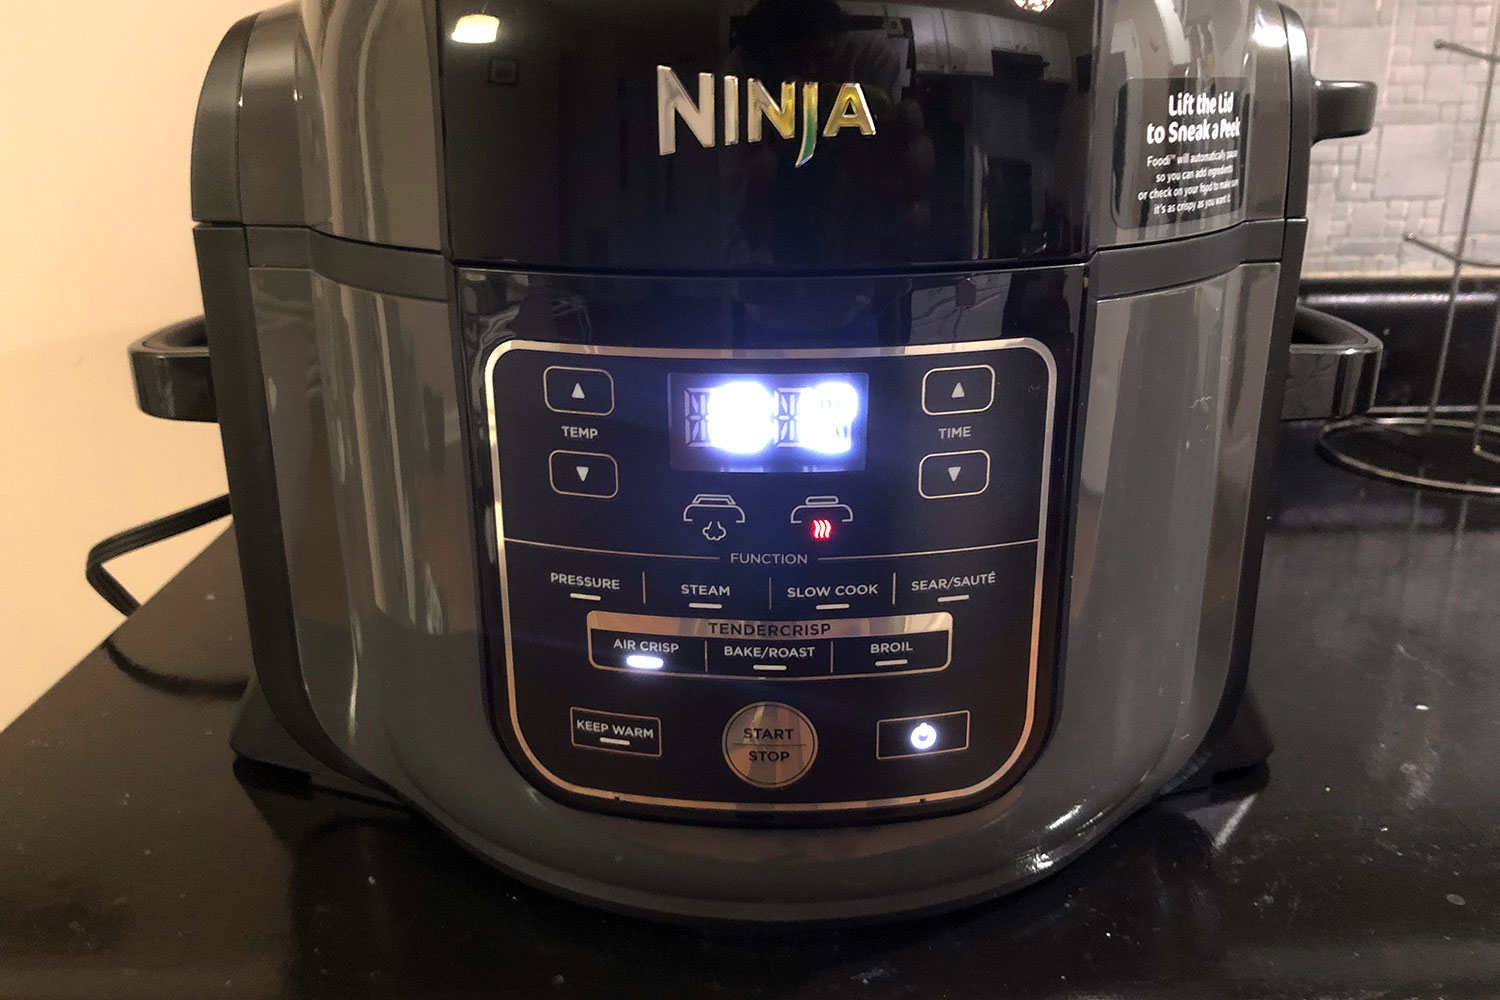 https://www.digitaltrends.com/wp-content/uploads/2018/11/ninja-foodi-review-11.jpg?fit=1500%2C1000&p=1